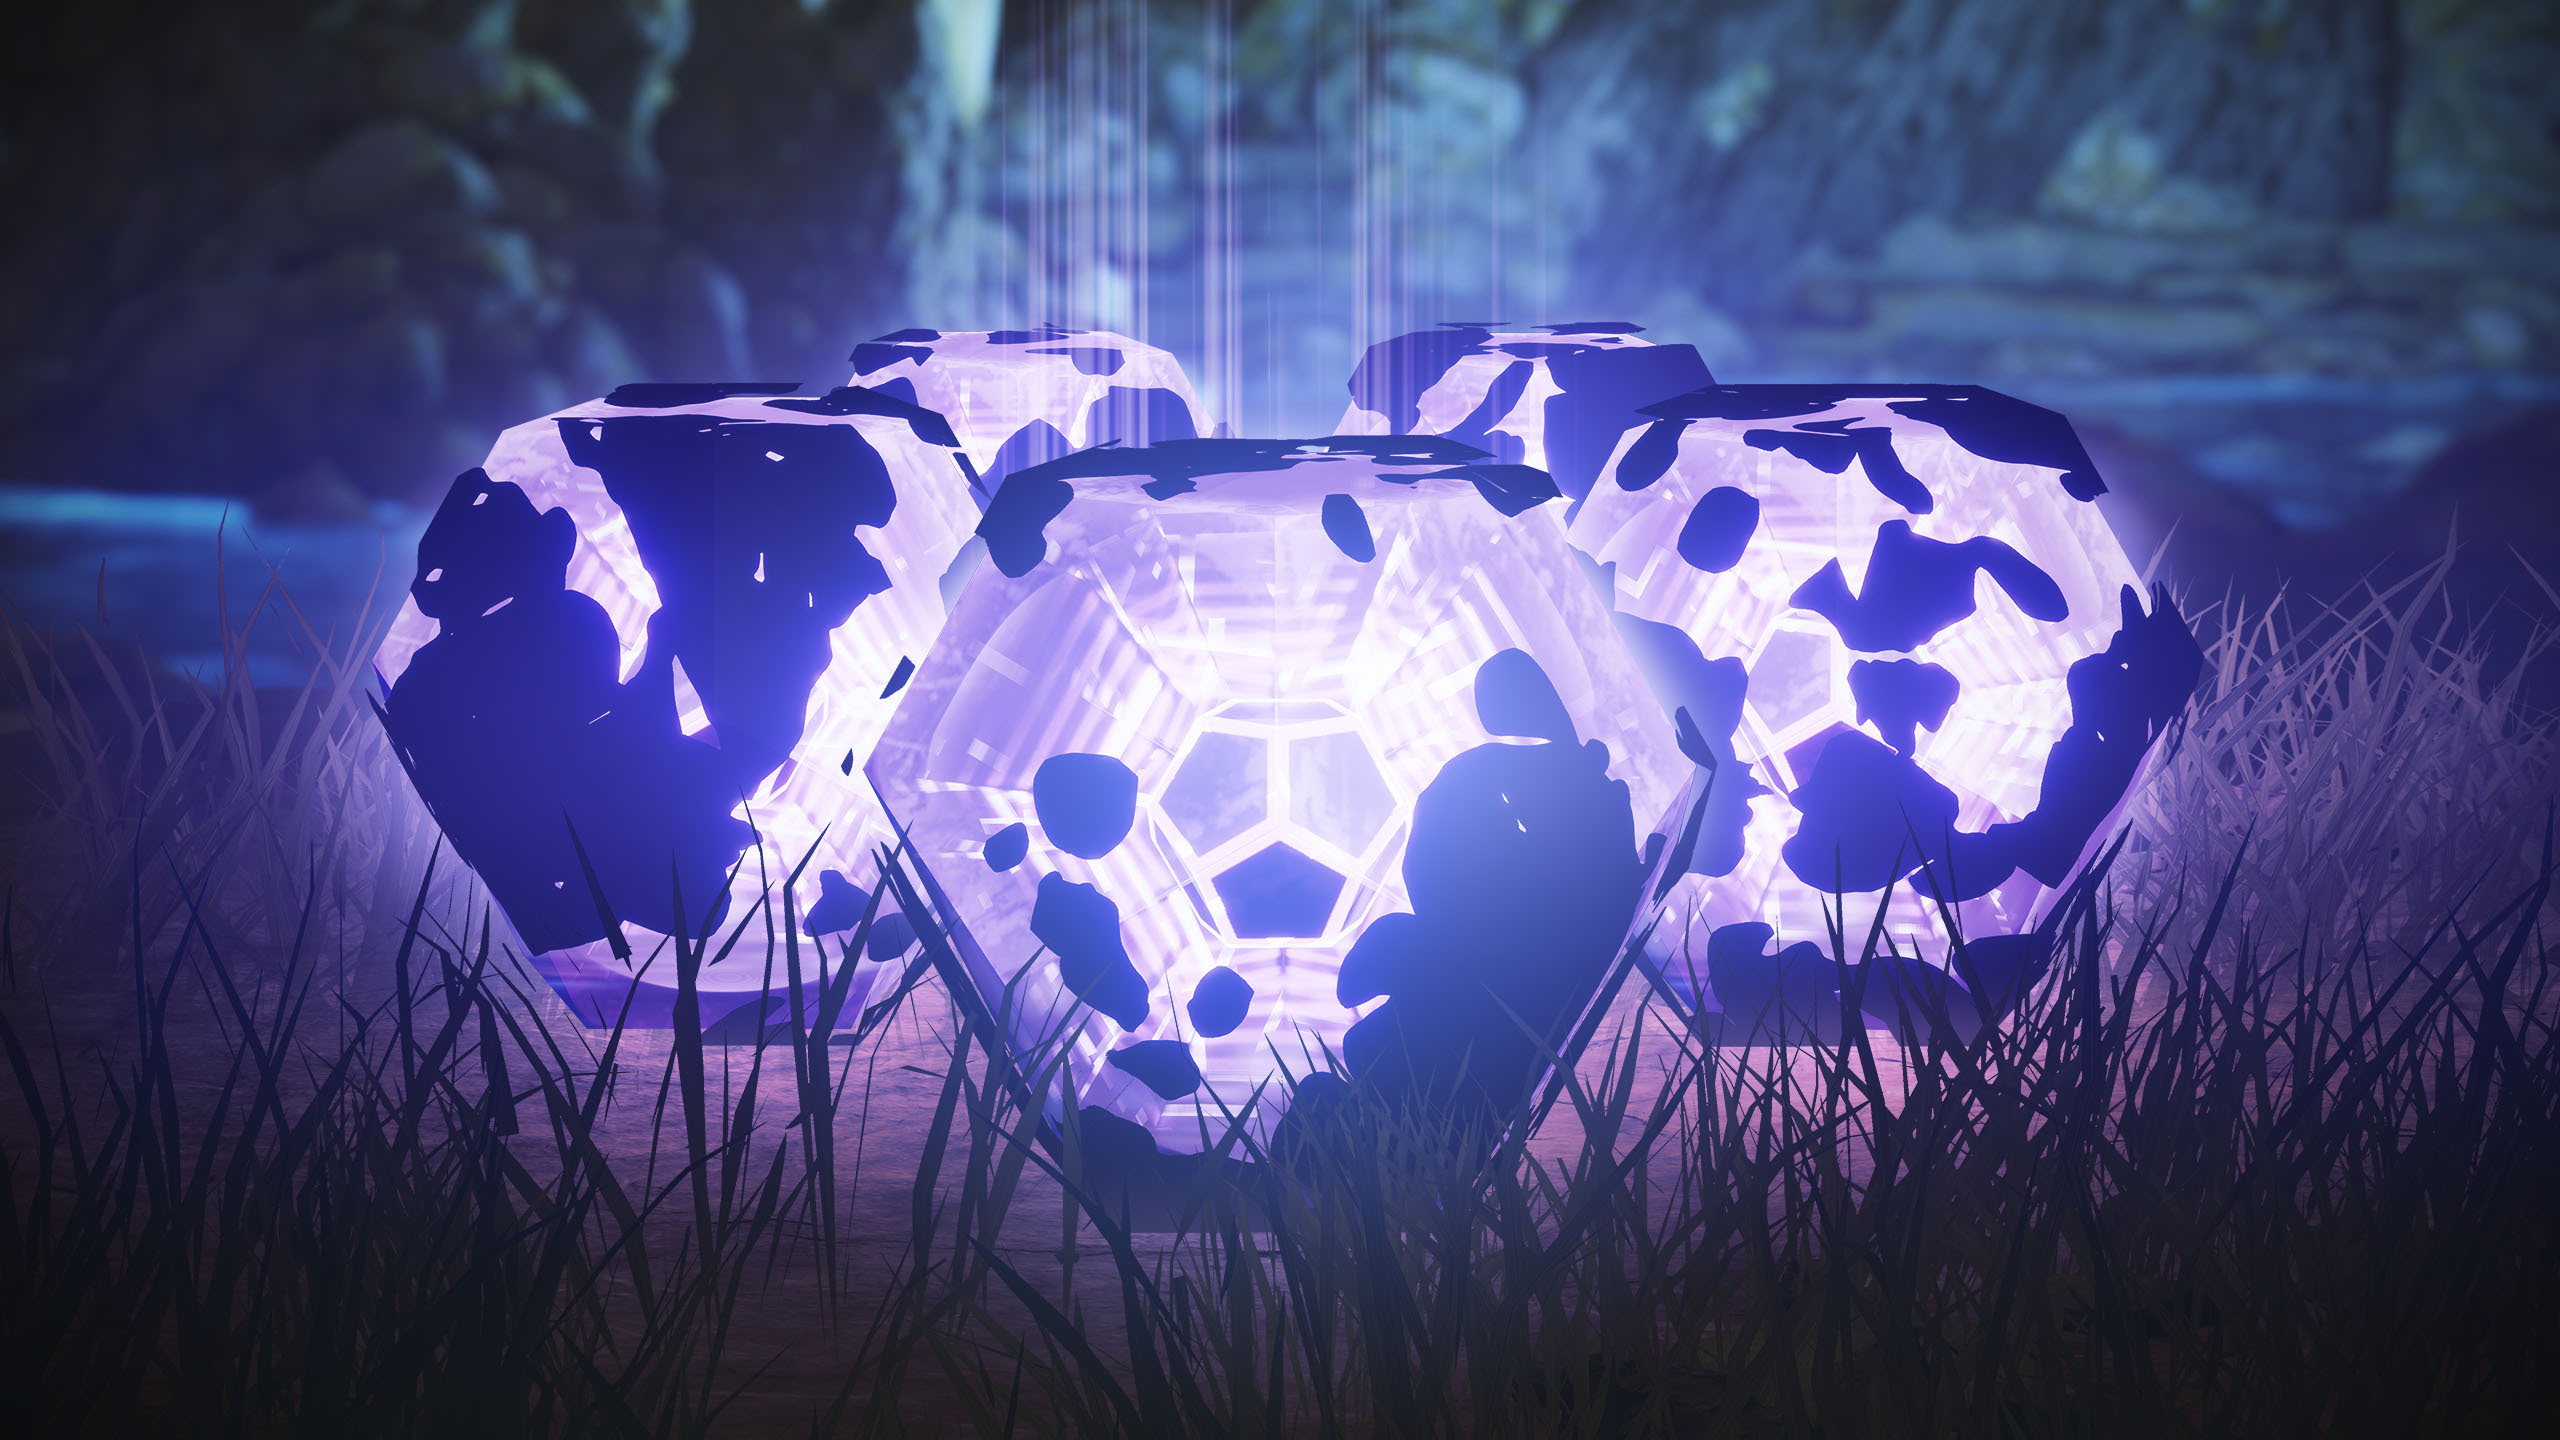 A stock image of Destiny 2’s purple legendary engrams